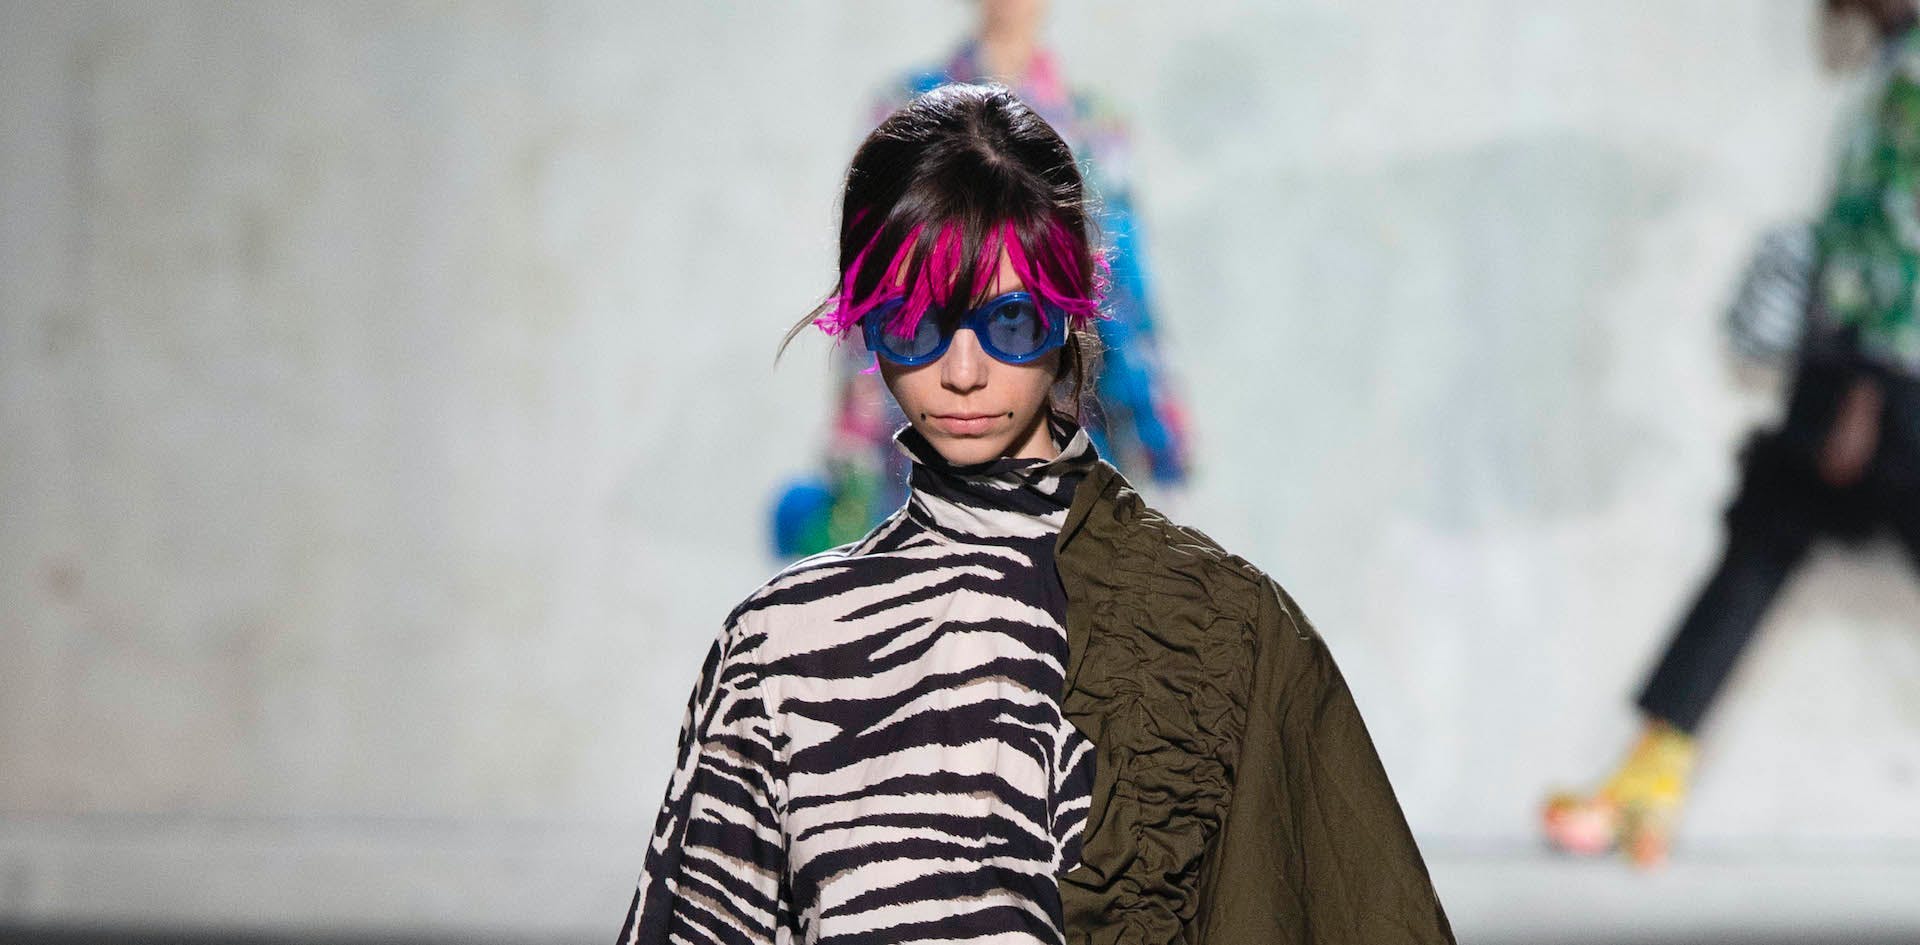 dries van noten paris pixelformula catwalk fashion fashion show pret a porter 2020 runway clothing apparel person human sunglasses accessories accessory sleeve